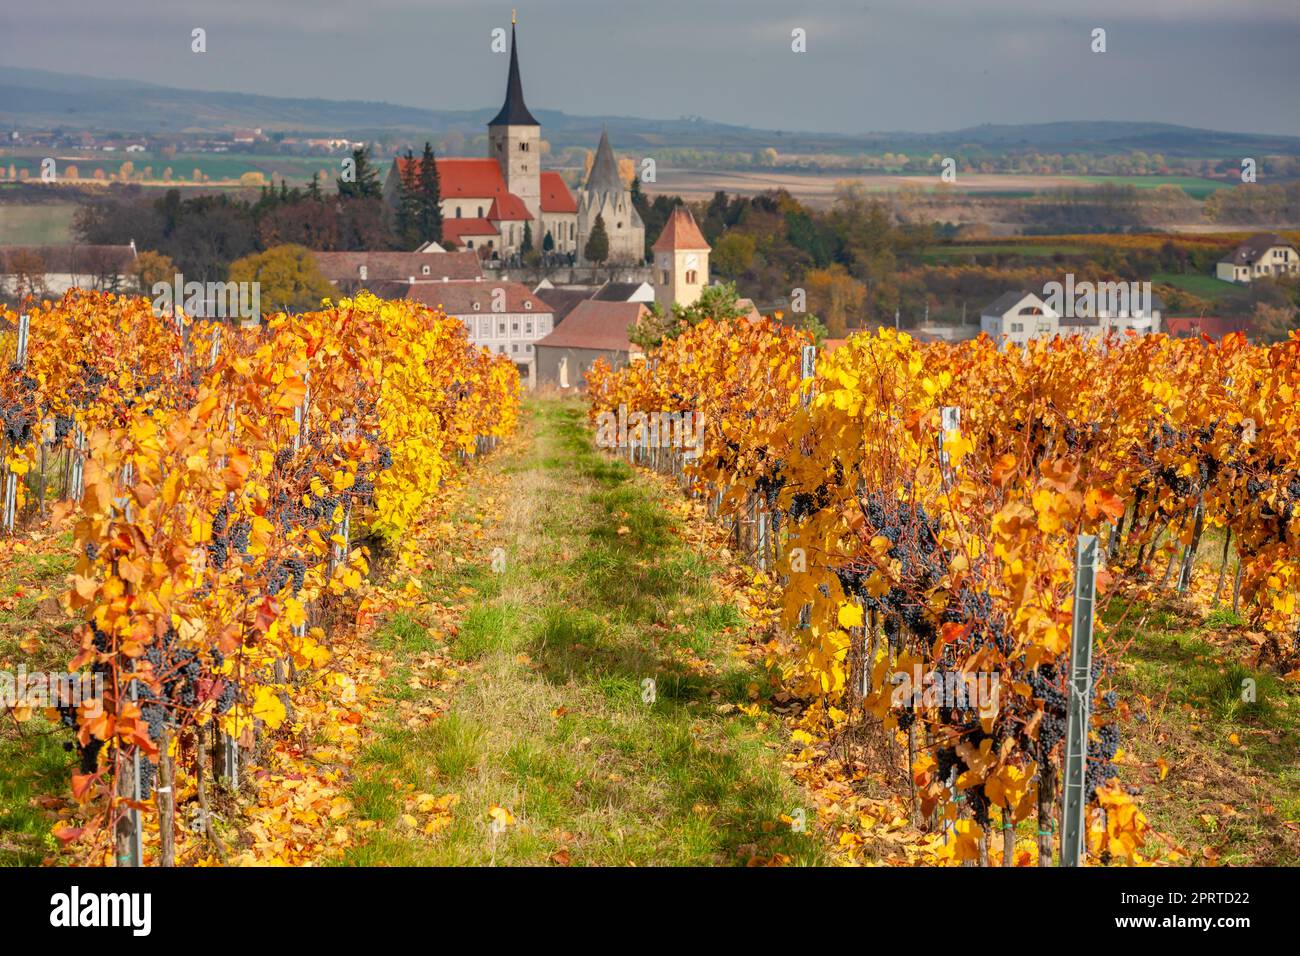 Vineyard in autumn near Pulkau, Lower Austria, Austria Stock Photo